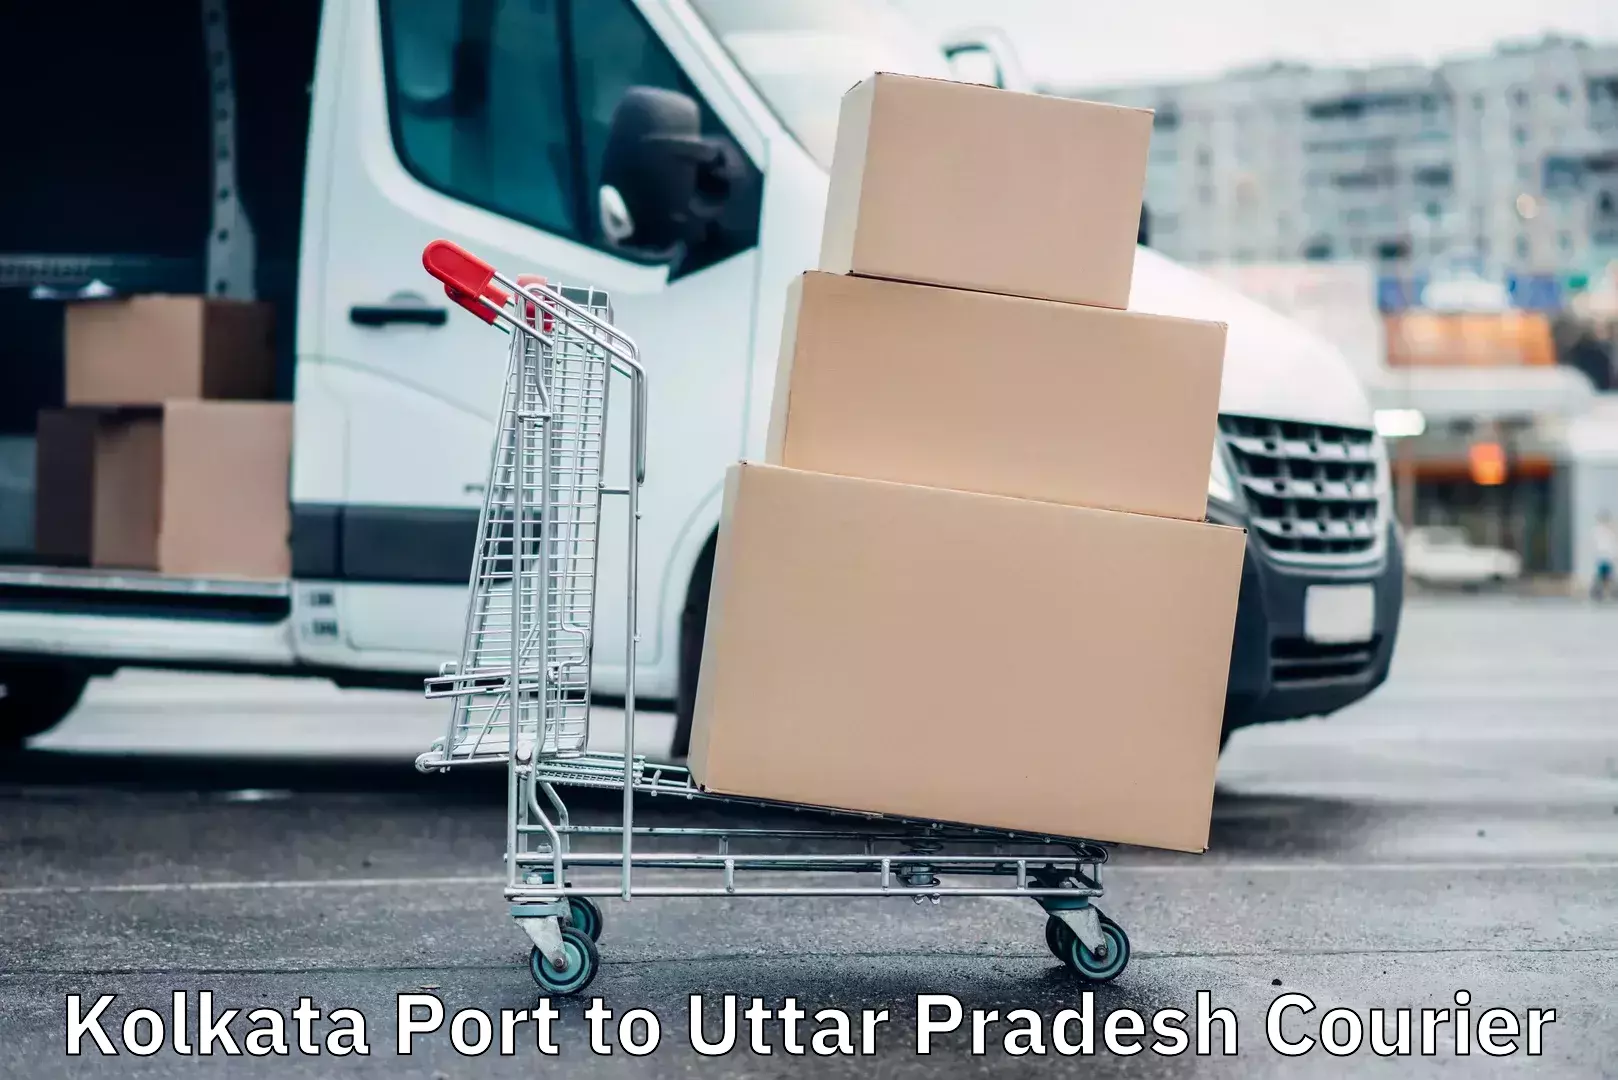 24-hour courier services Kolkata Port to Uttar Pradesh